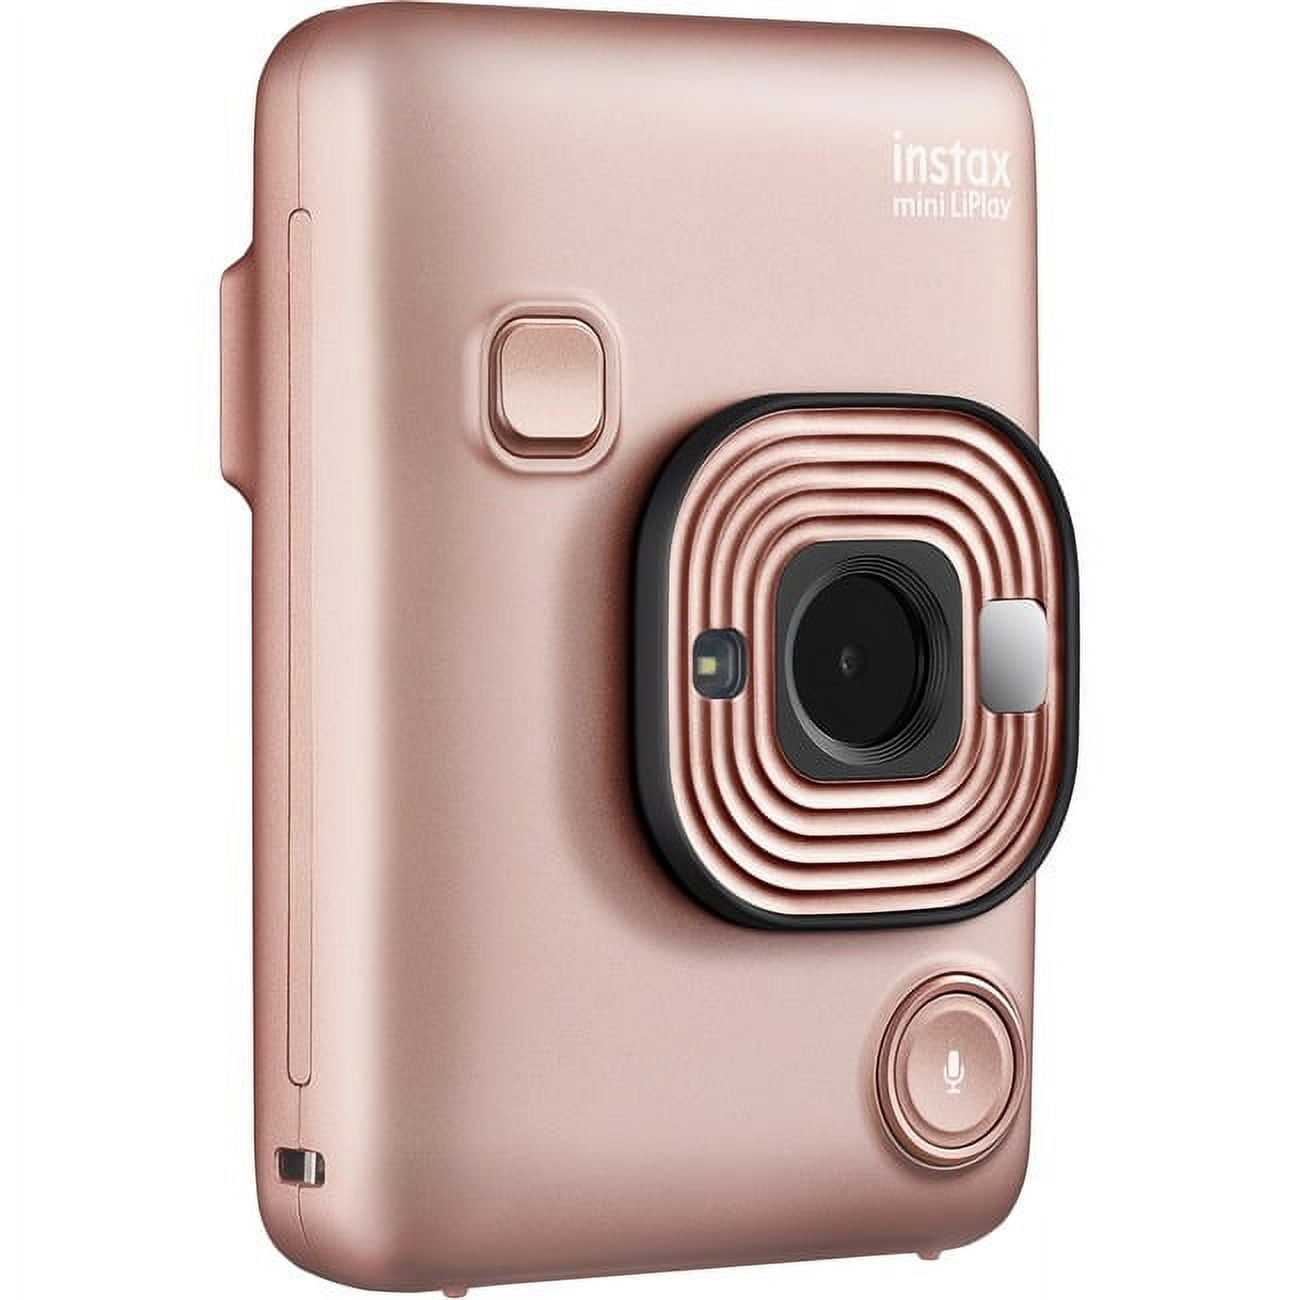 Instax Mini Hybrid LiPlay Camera, Blush Gold - Walmart.com